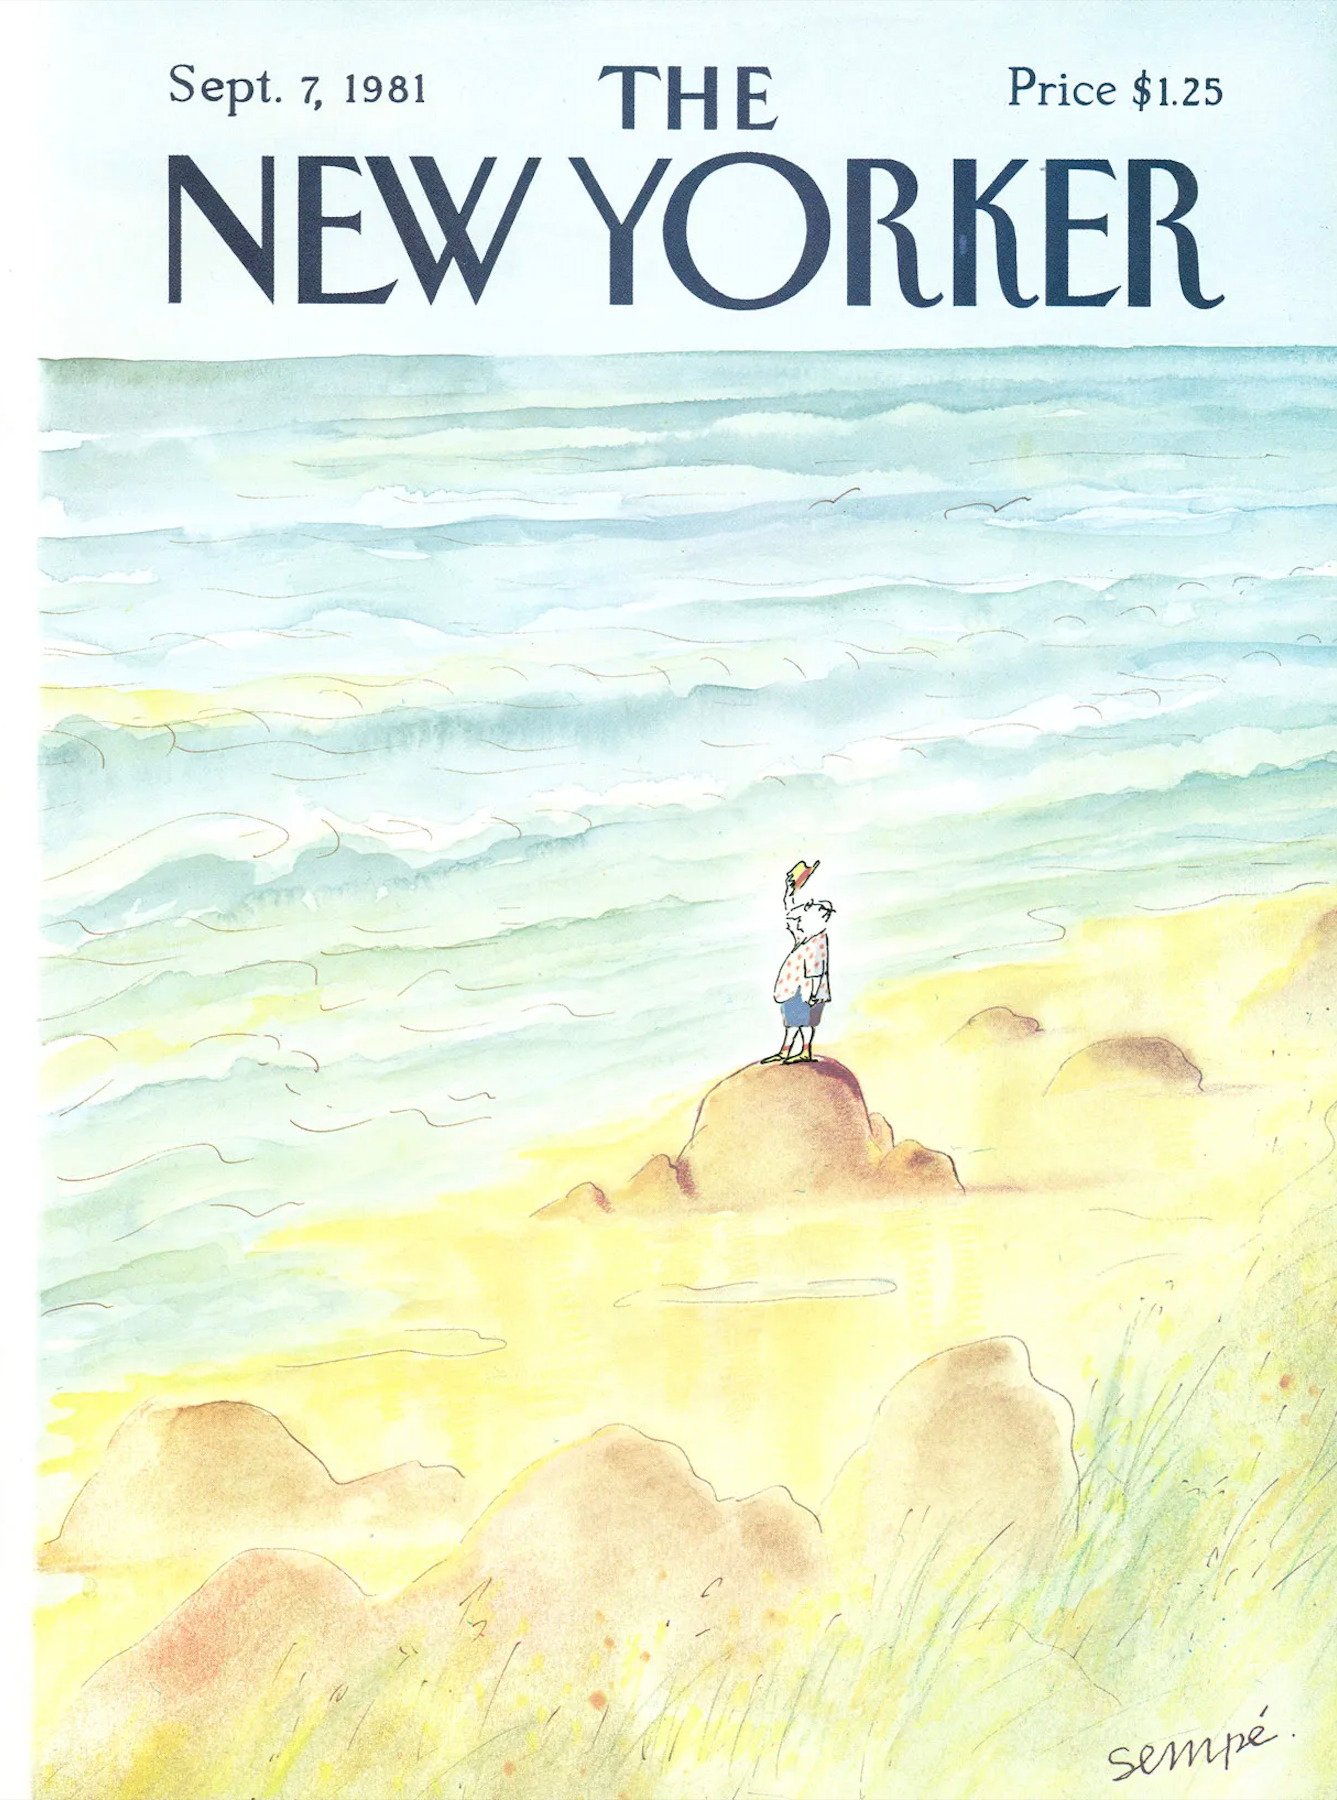 La copertina di Jean Jacques Sempé per The New Yorker.